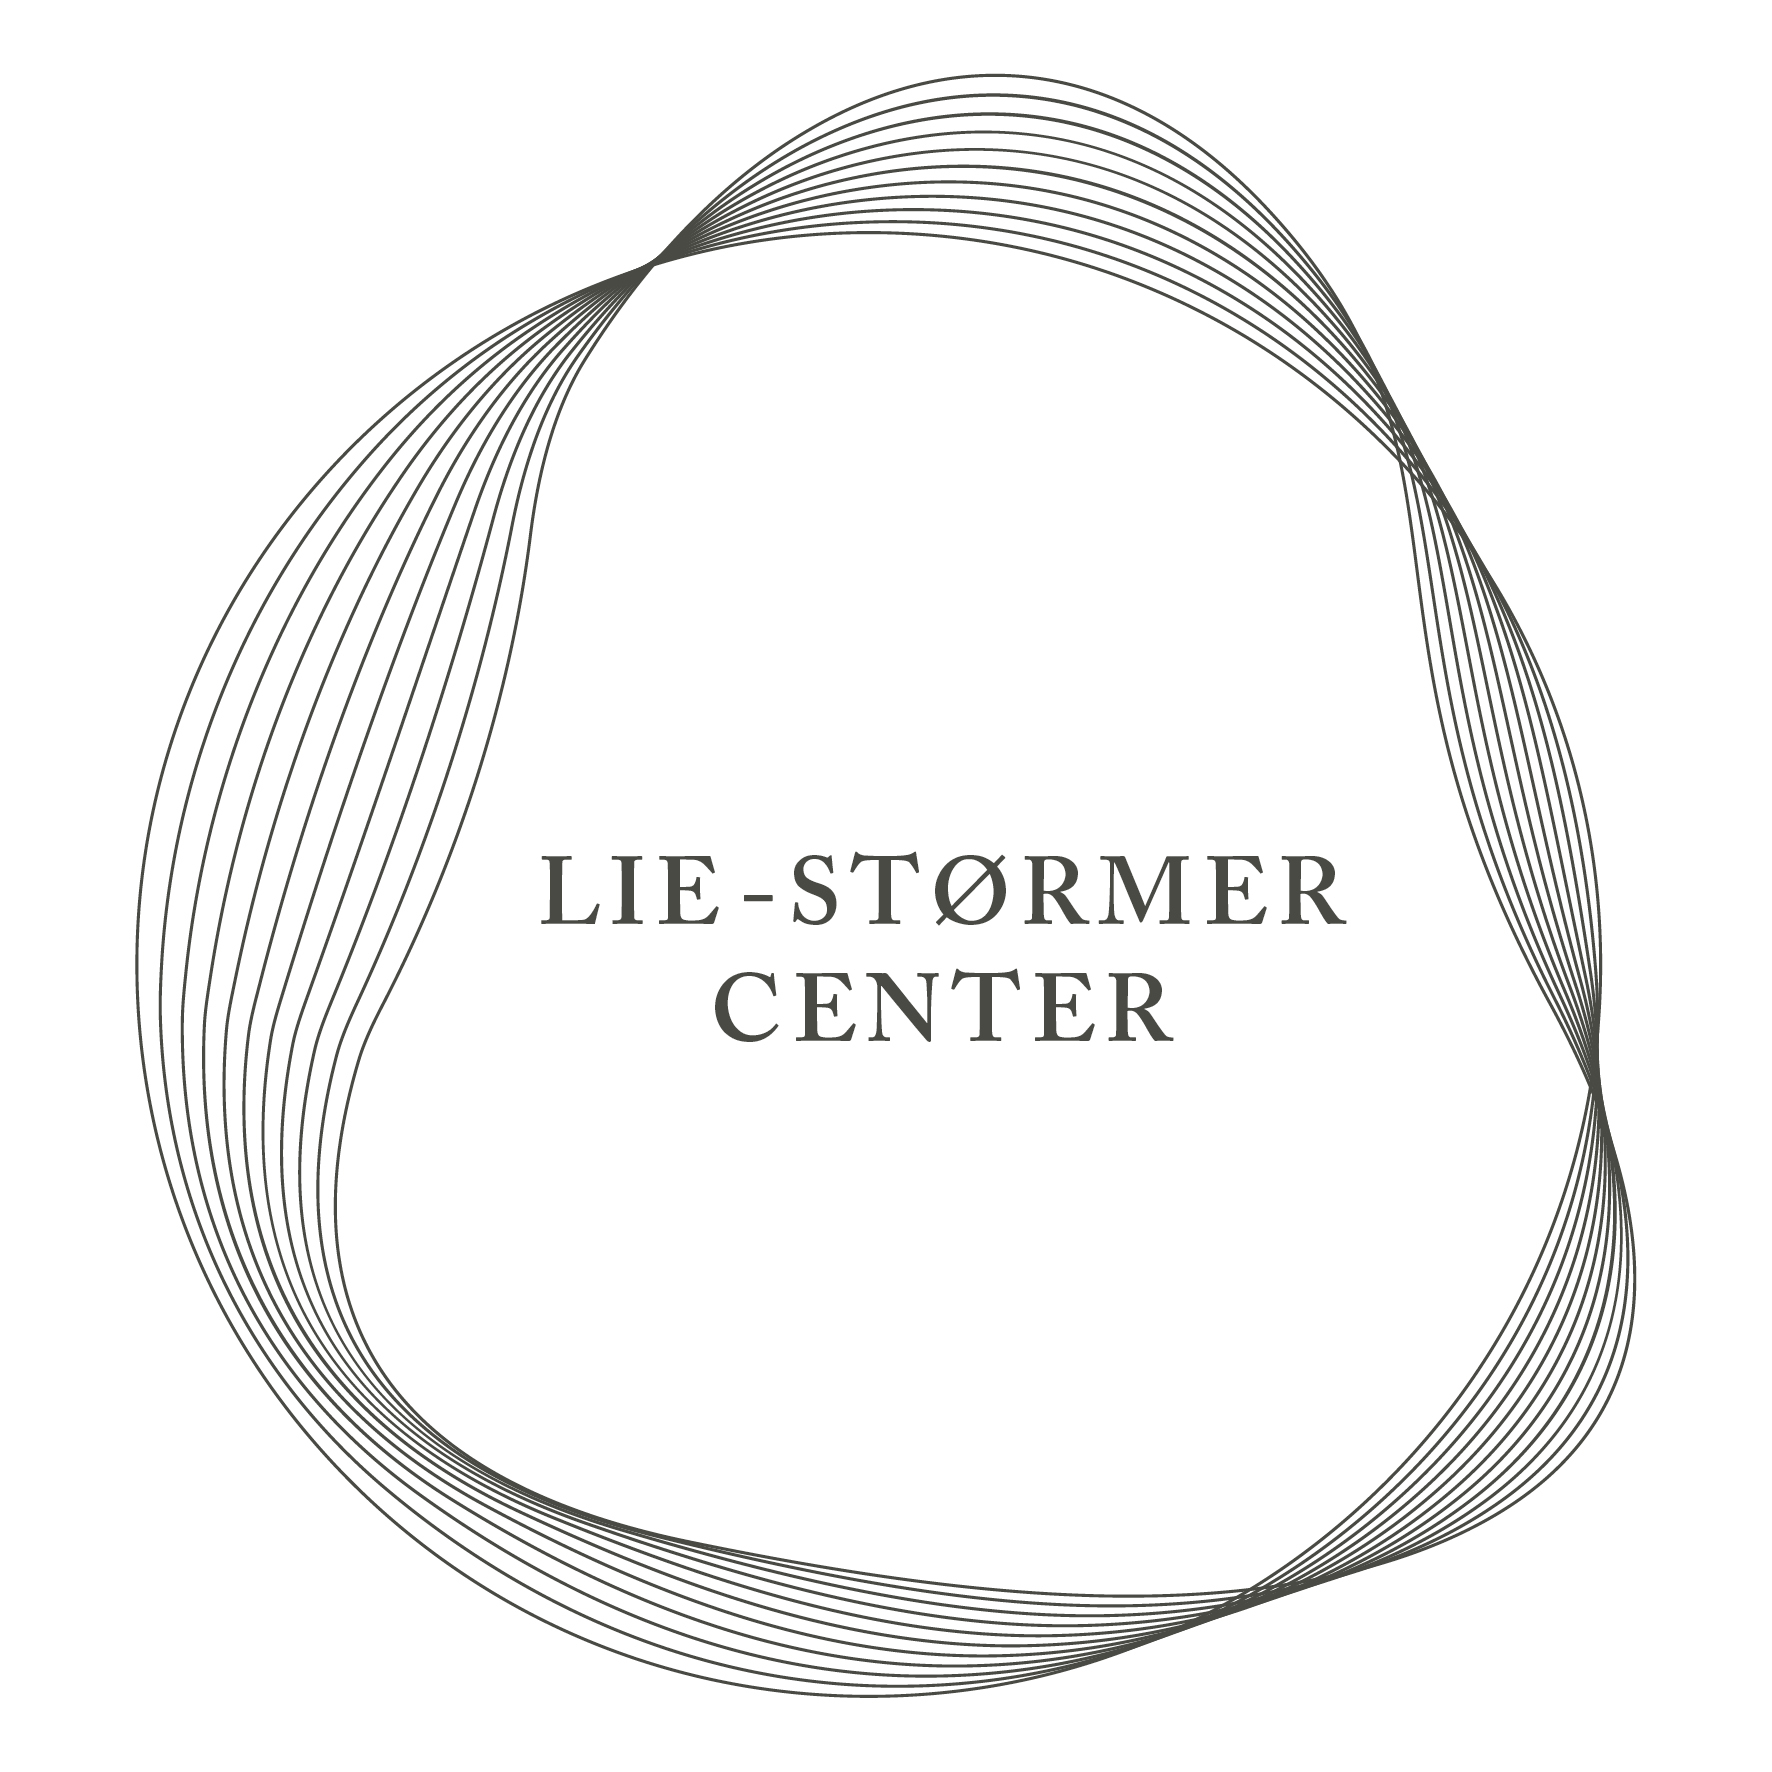 the Lie-St淡rmer Center